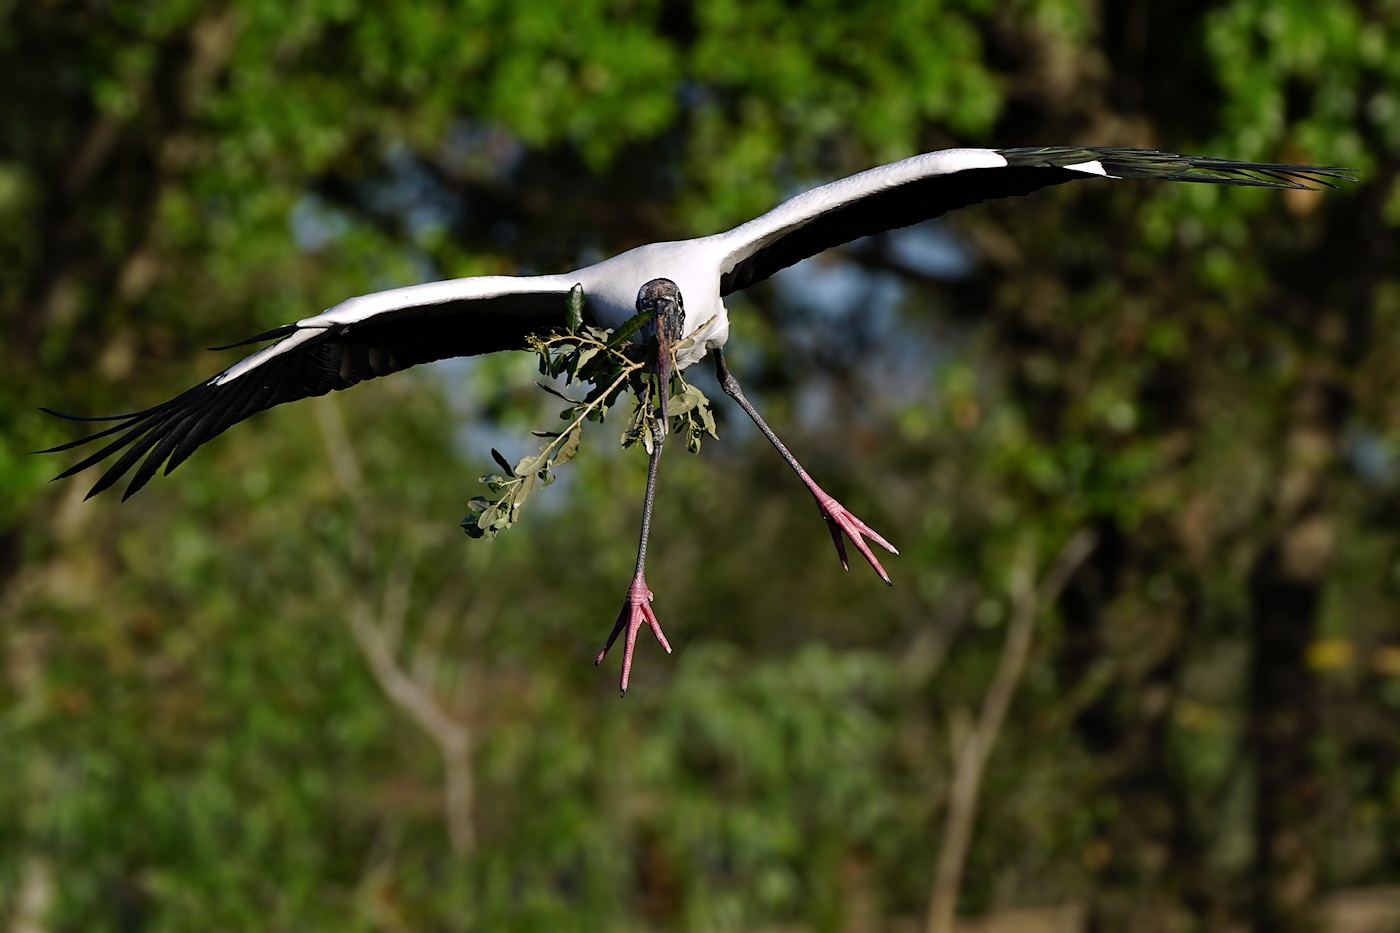 Wood stork coming at the lens